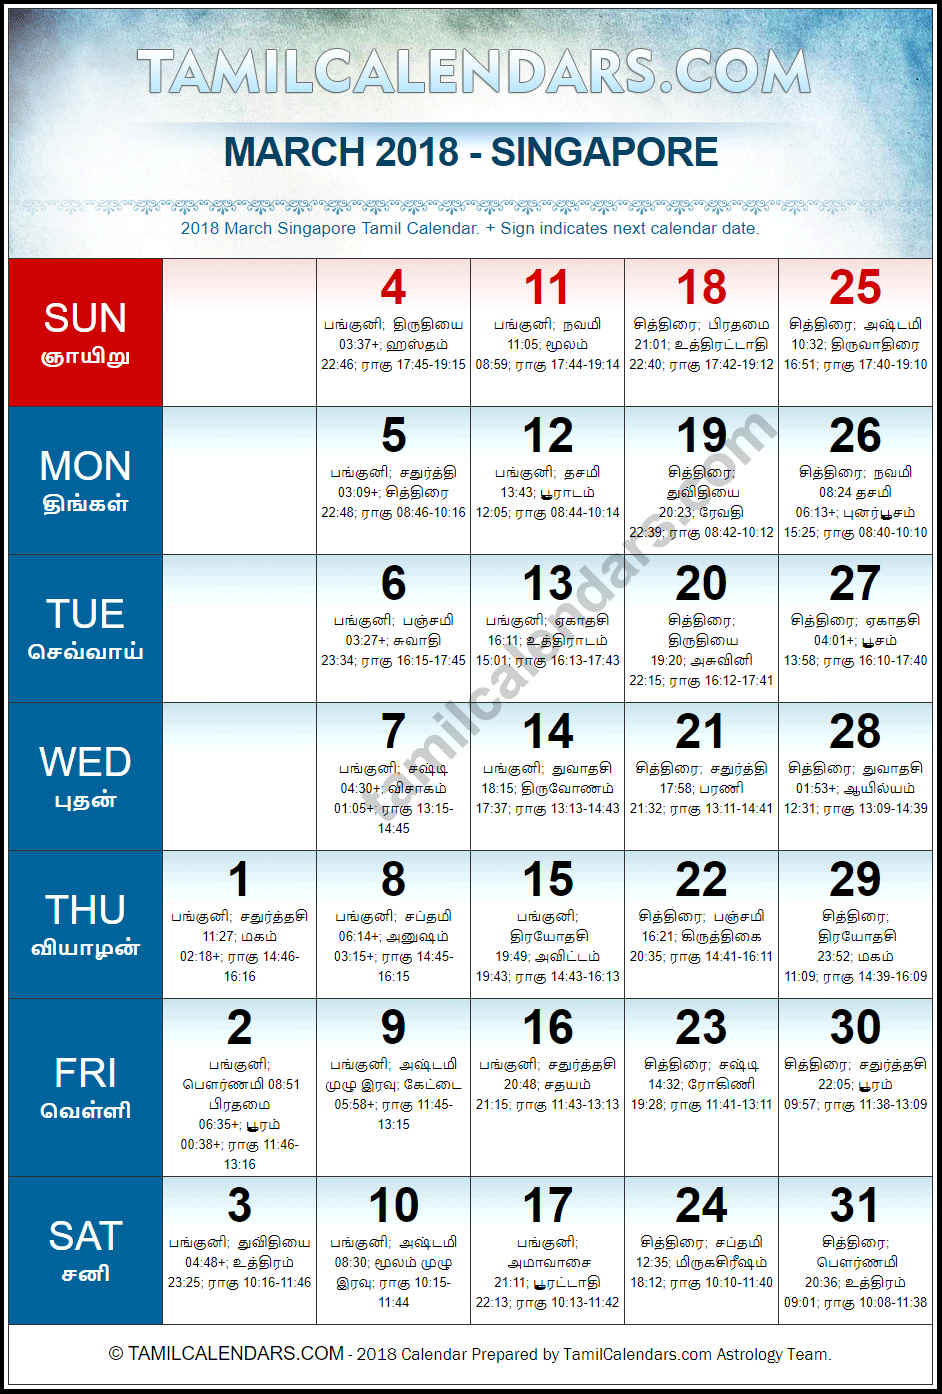 March 2018 Tamil Calendar for Singapore